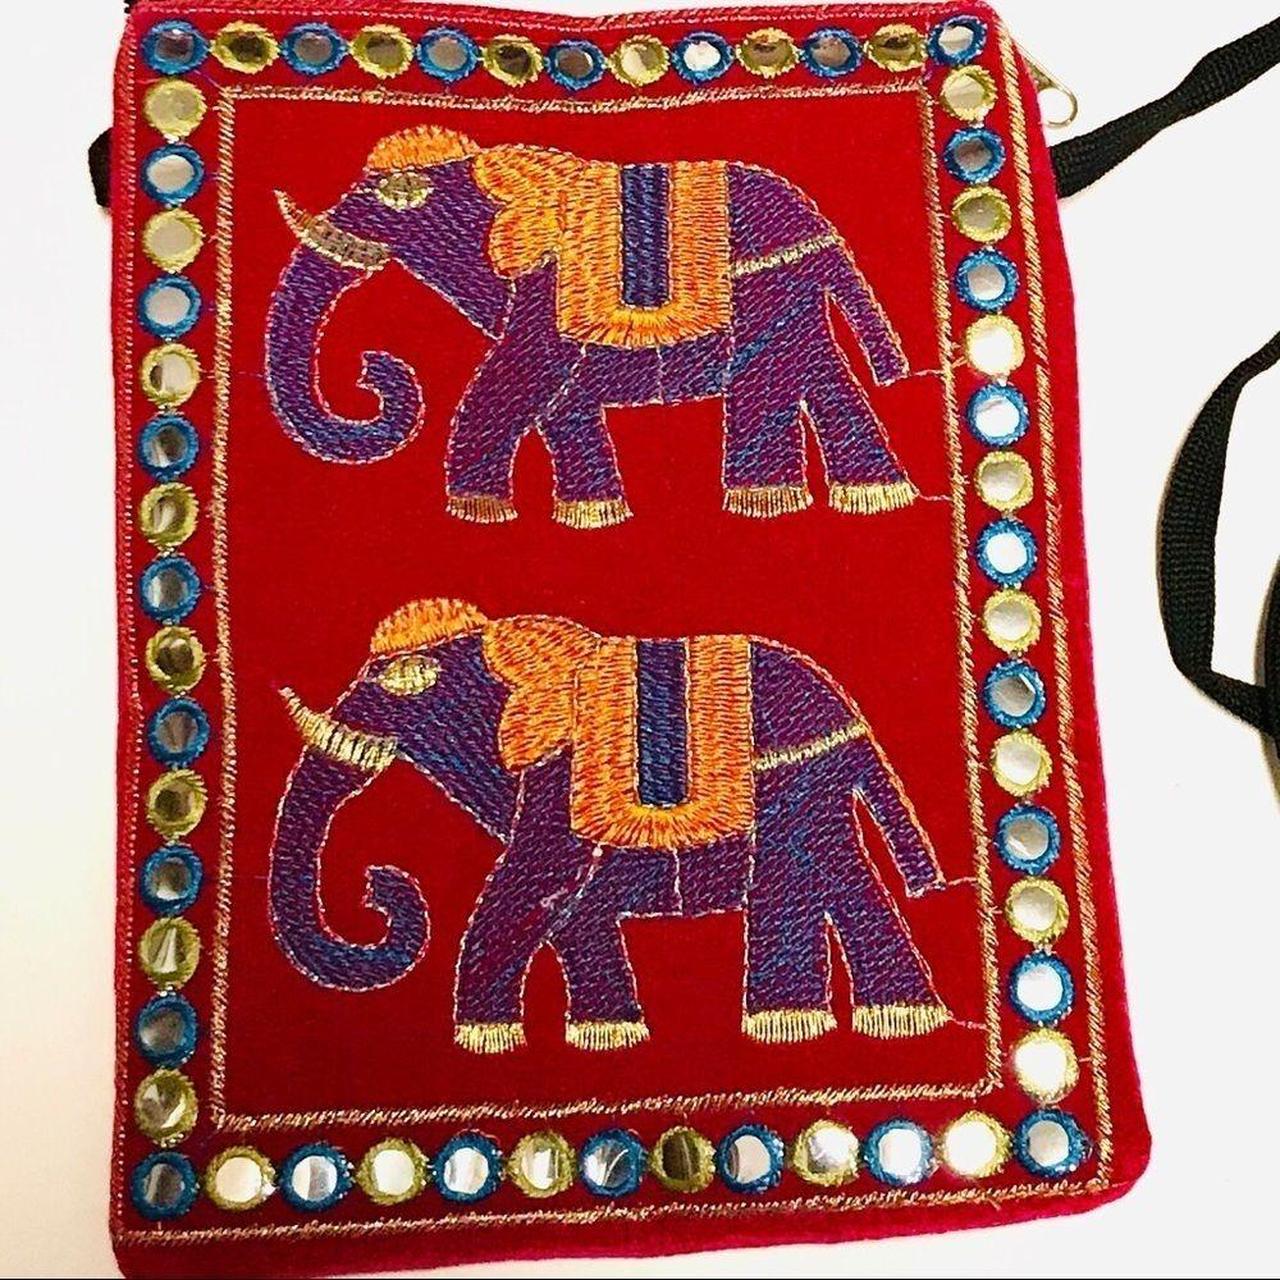 Product Image 3 - Embroidery Boho Elephant Shoulder Bag

Bag